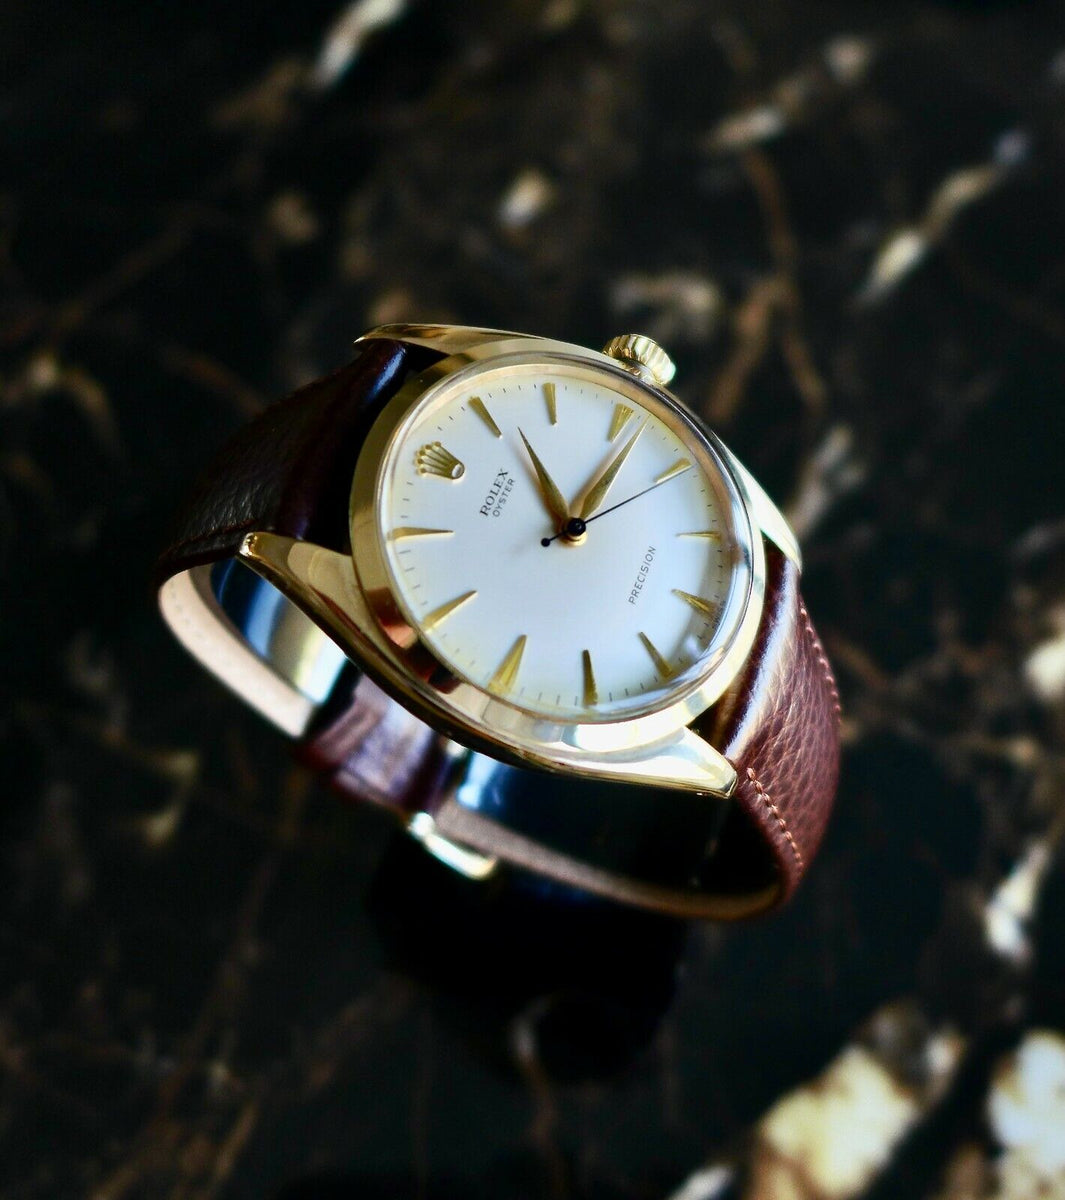 ROLEX オイスター  プレシジョン Ref.5059 アンティーク品 メンズ 腕時計